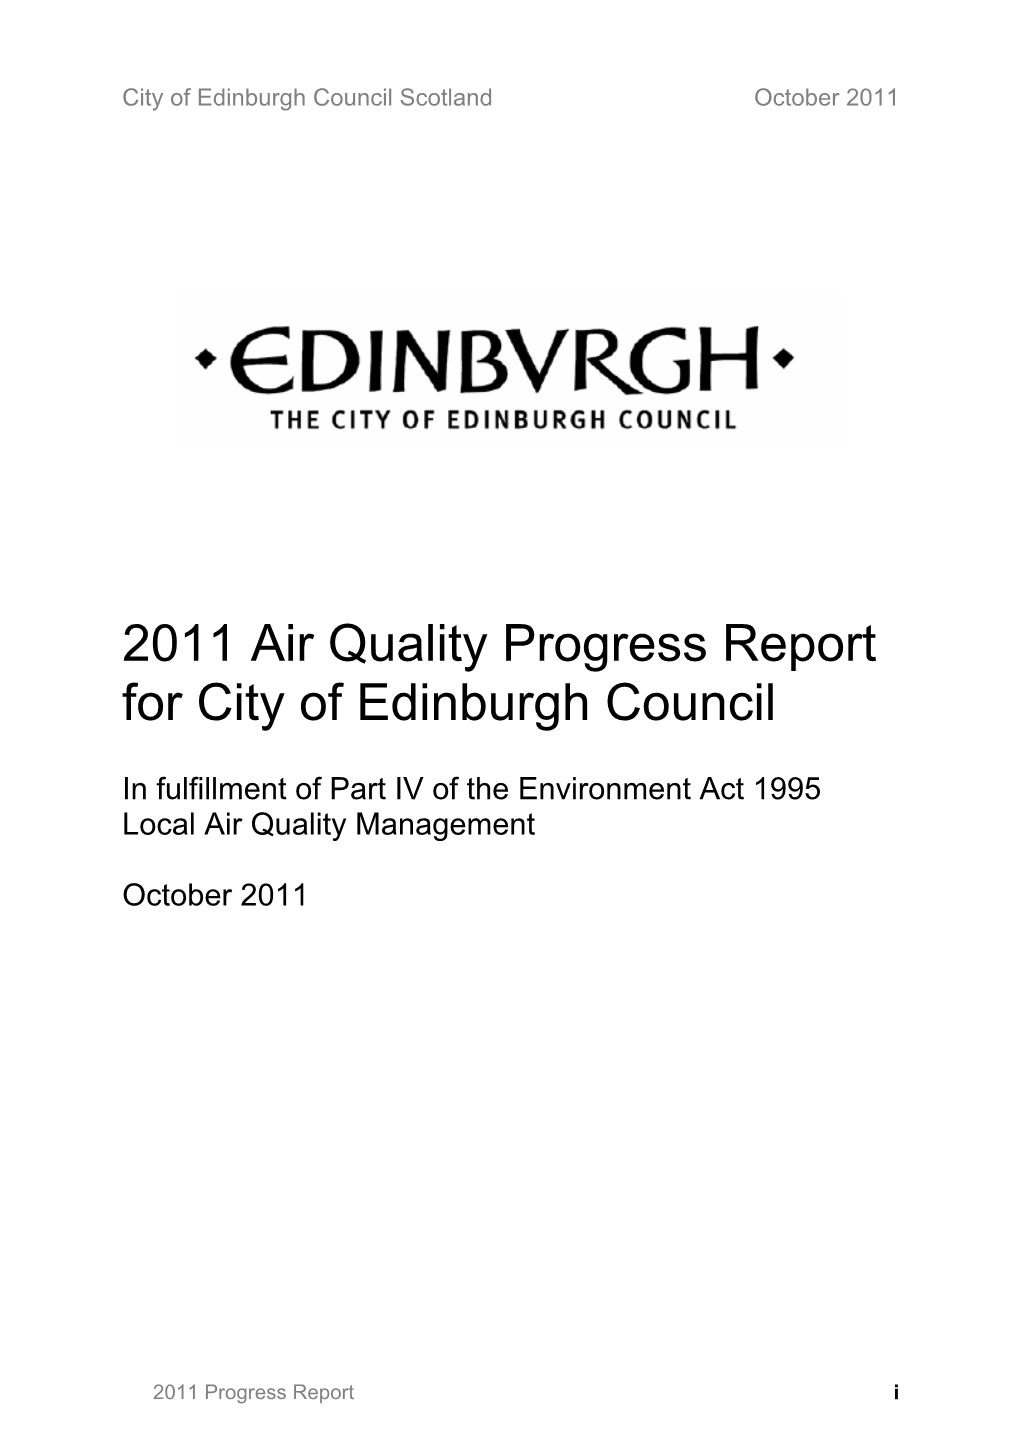 Progress Report 2011